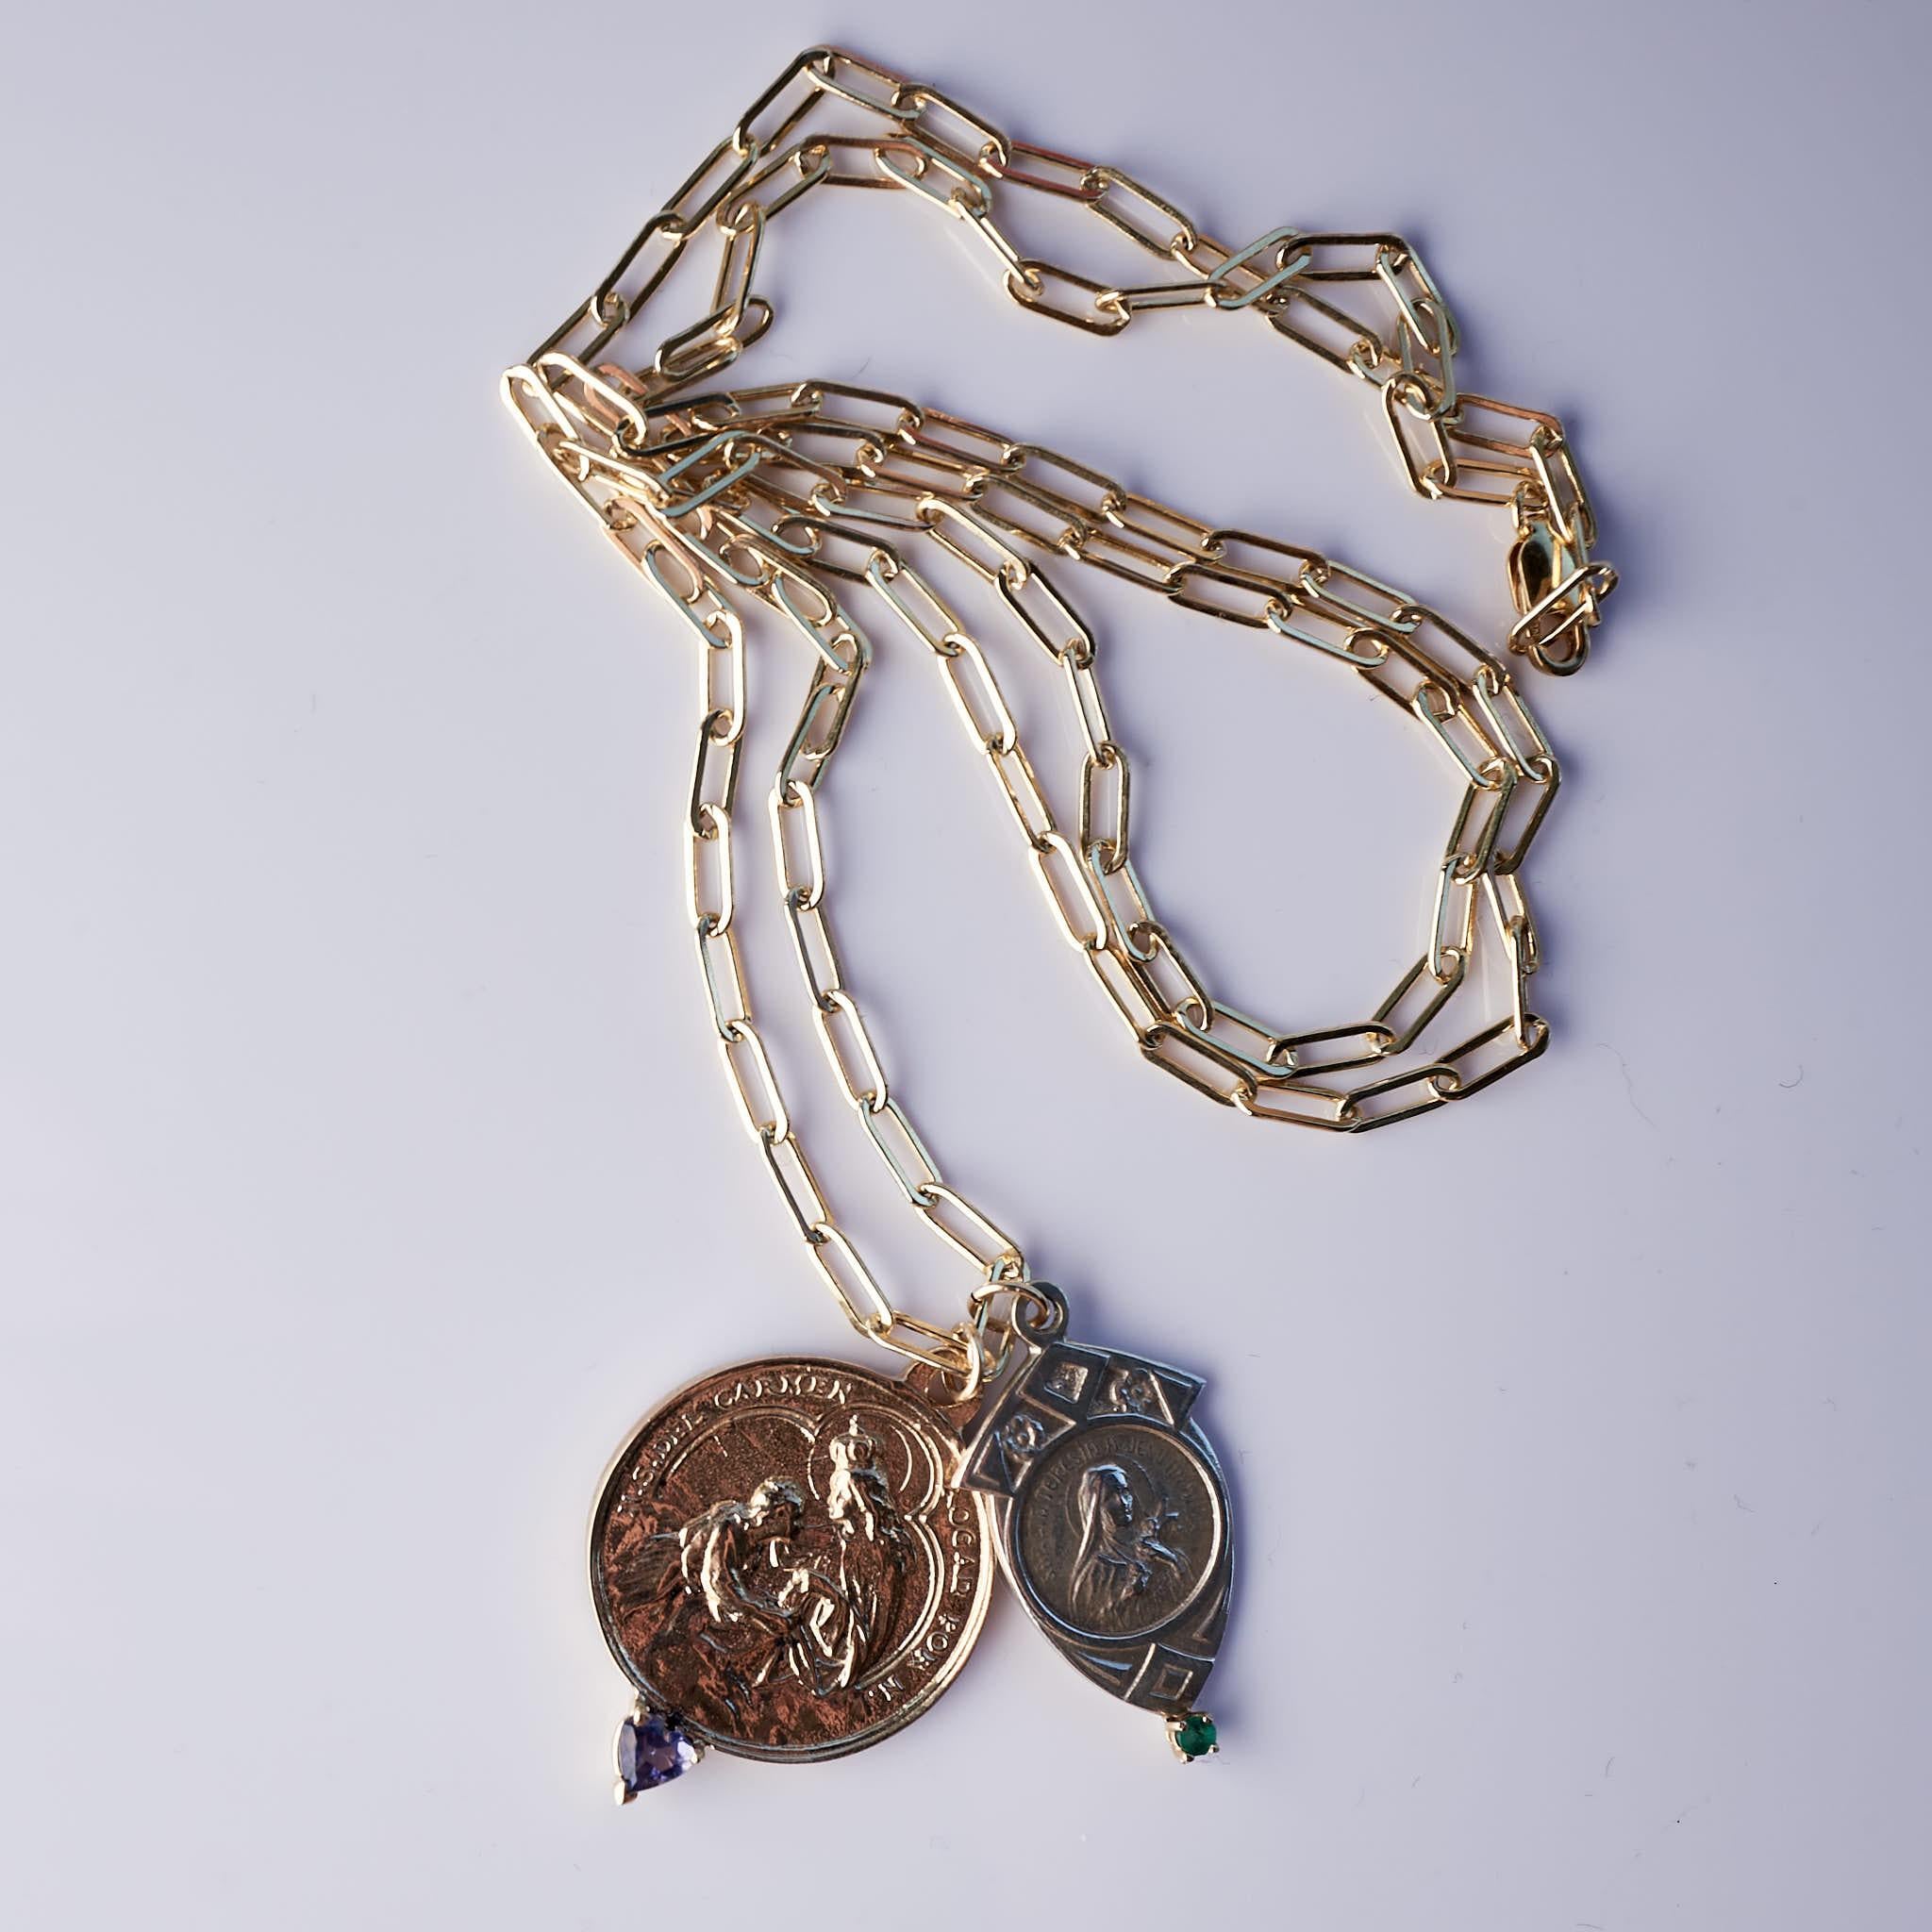 Brilliant Cut Medal Necklace Chain Virgin Mary Heart Tanzanite Emerald Silver Bronze J Dauphin For Sale